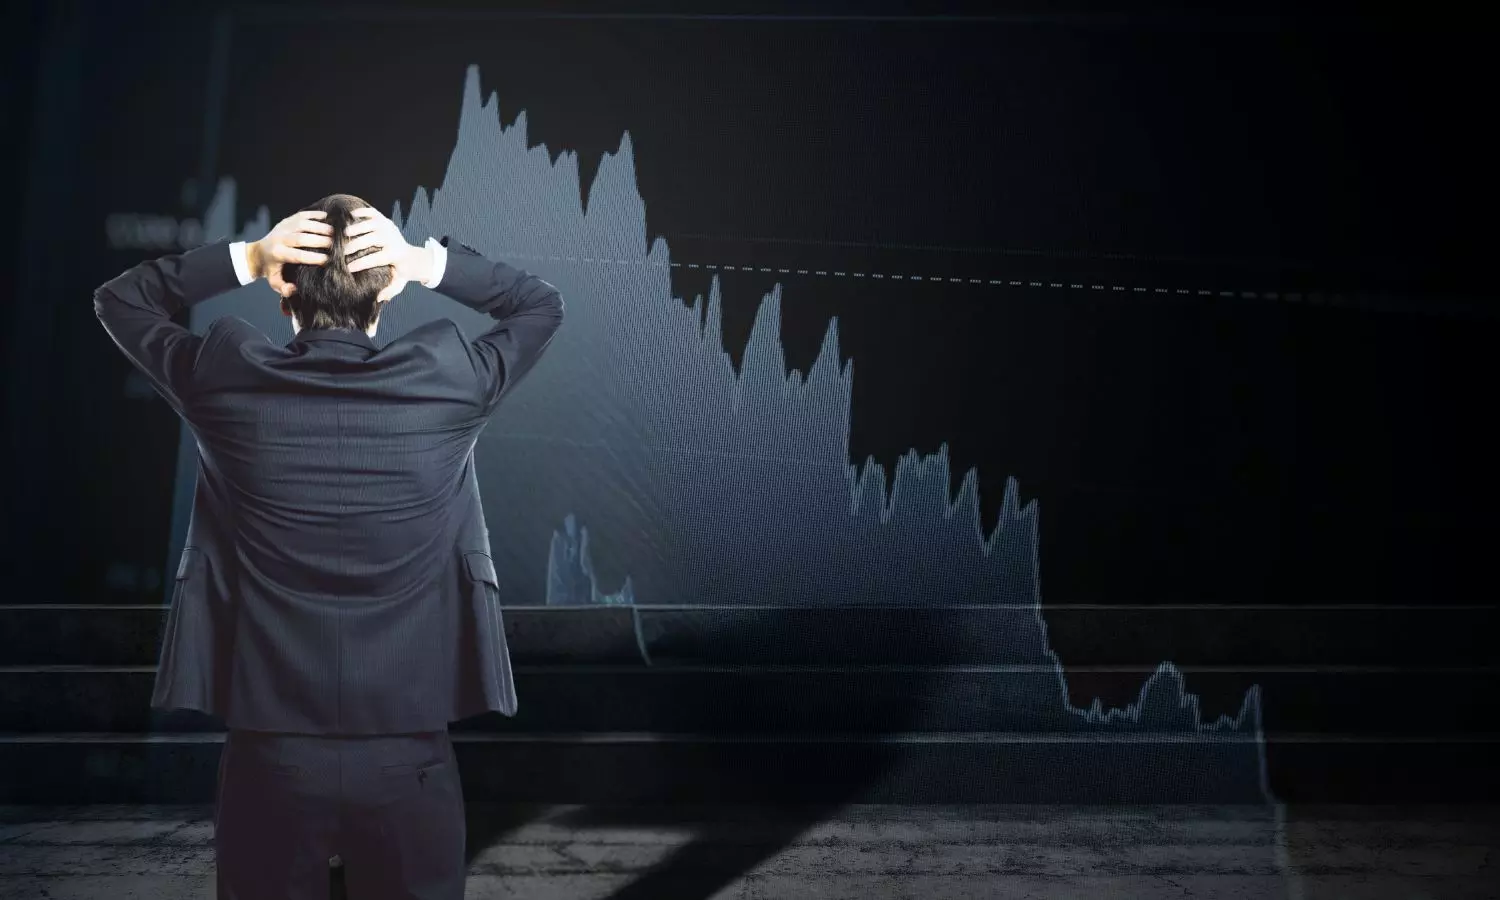 Stock market loss